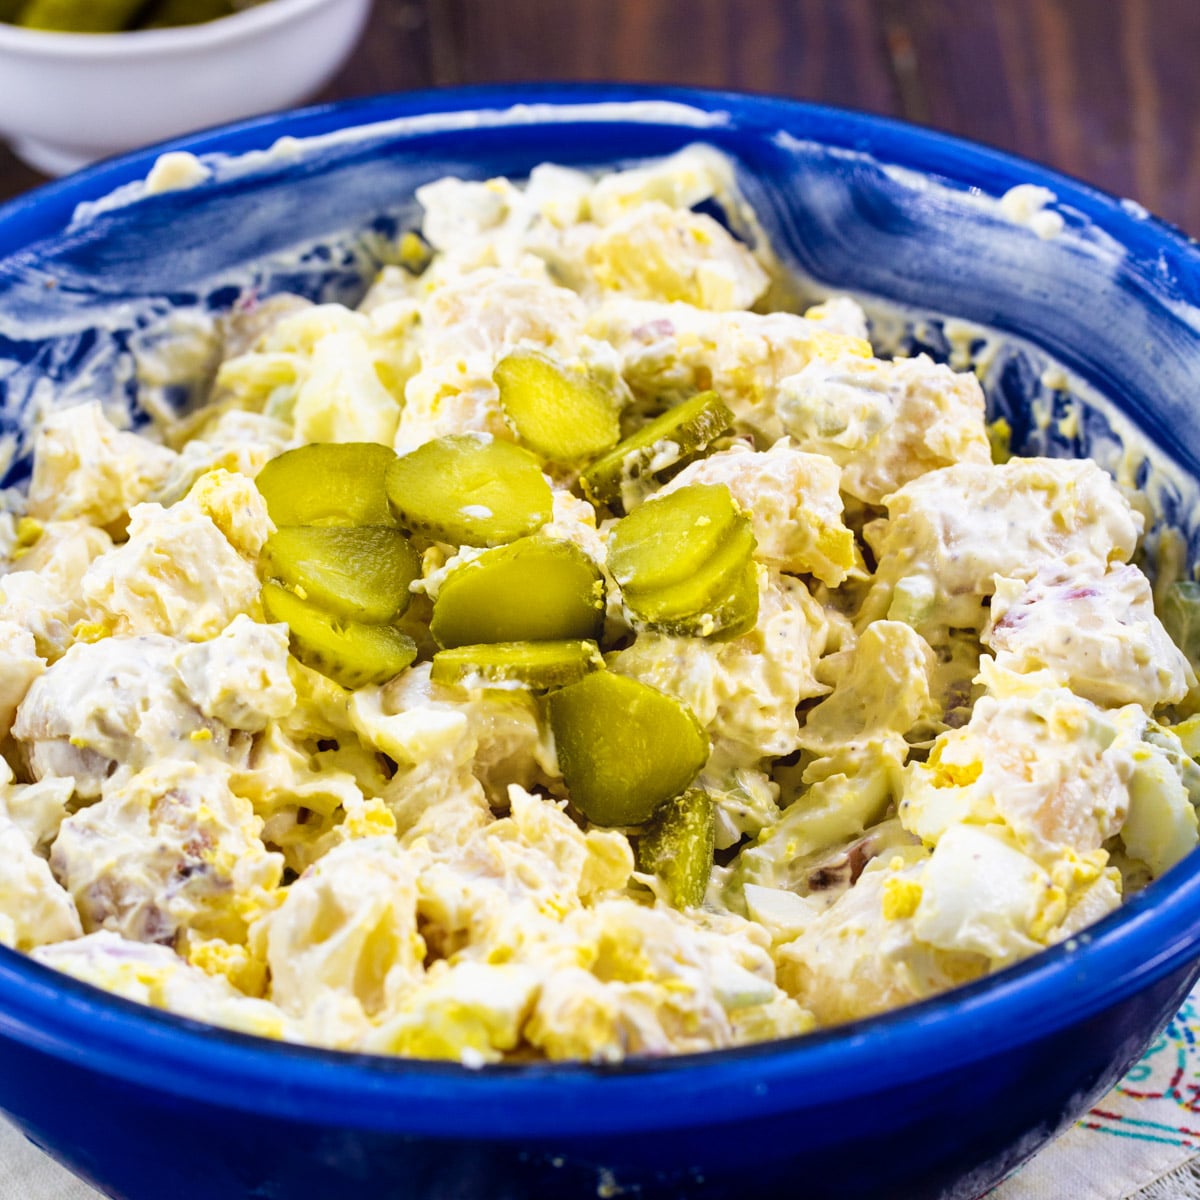 Dill Pickle Potato Salad in a blue bowl.